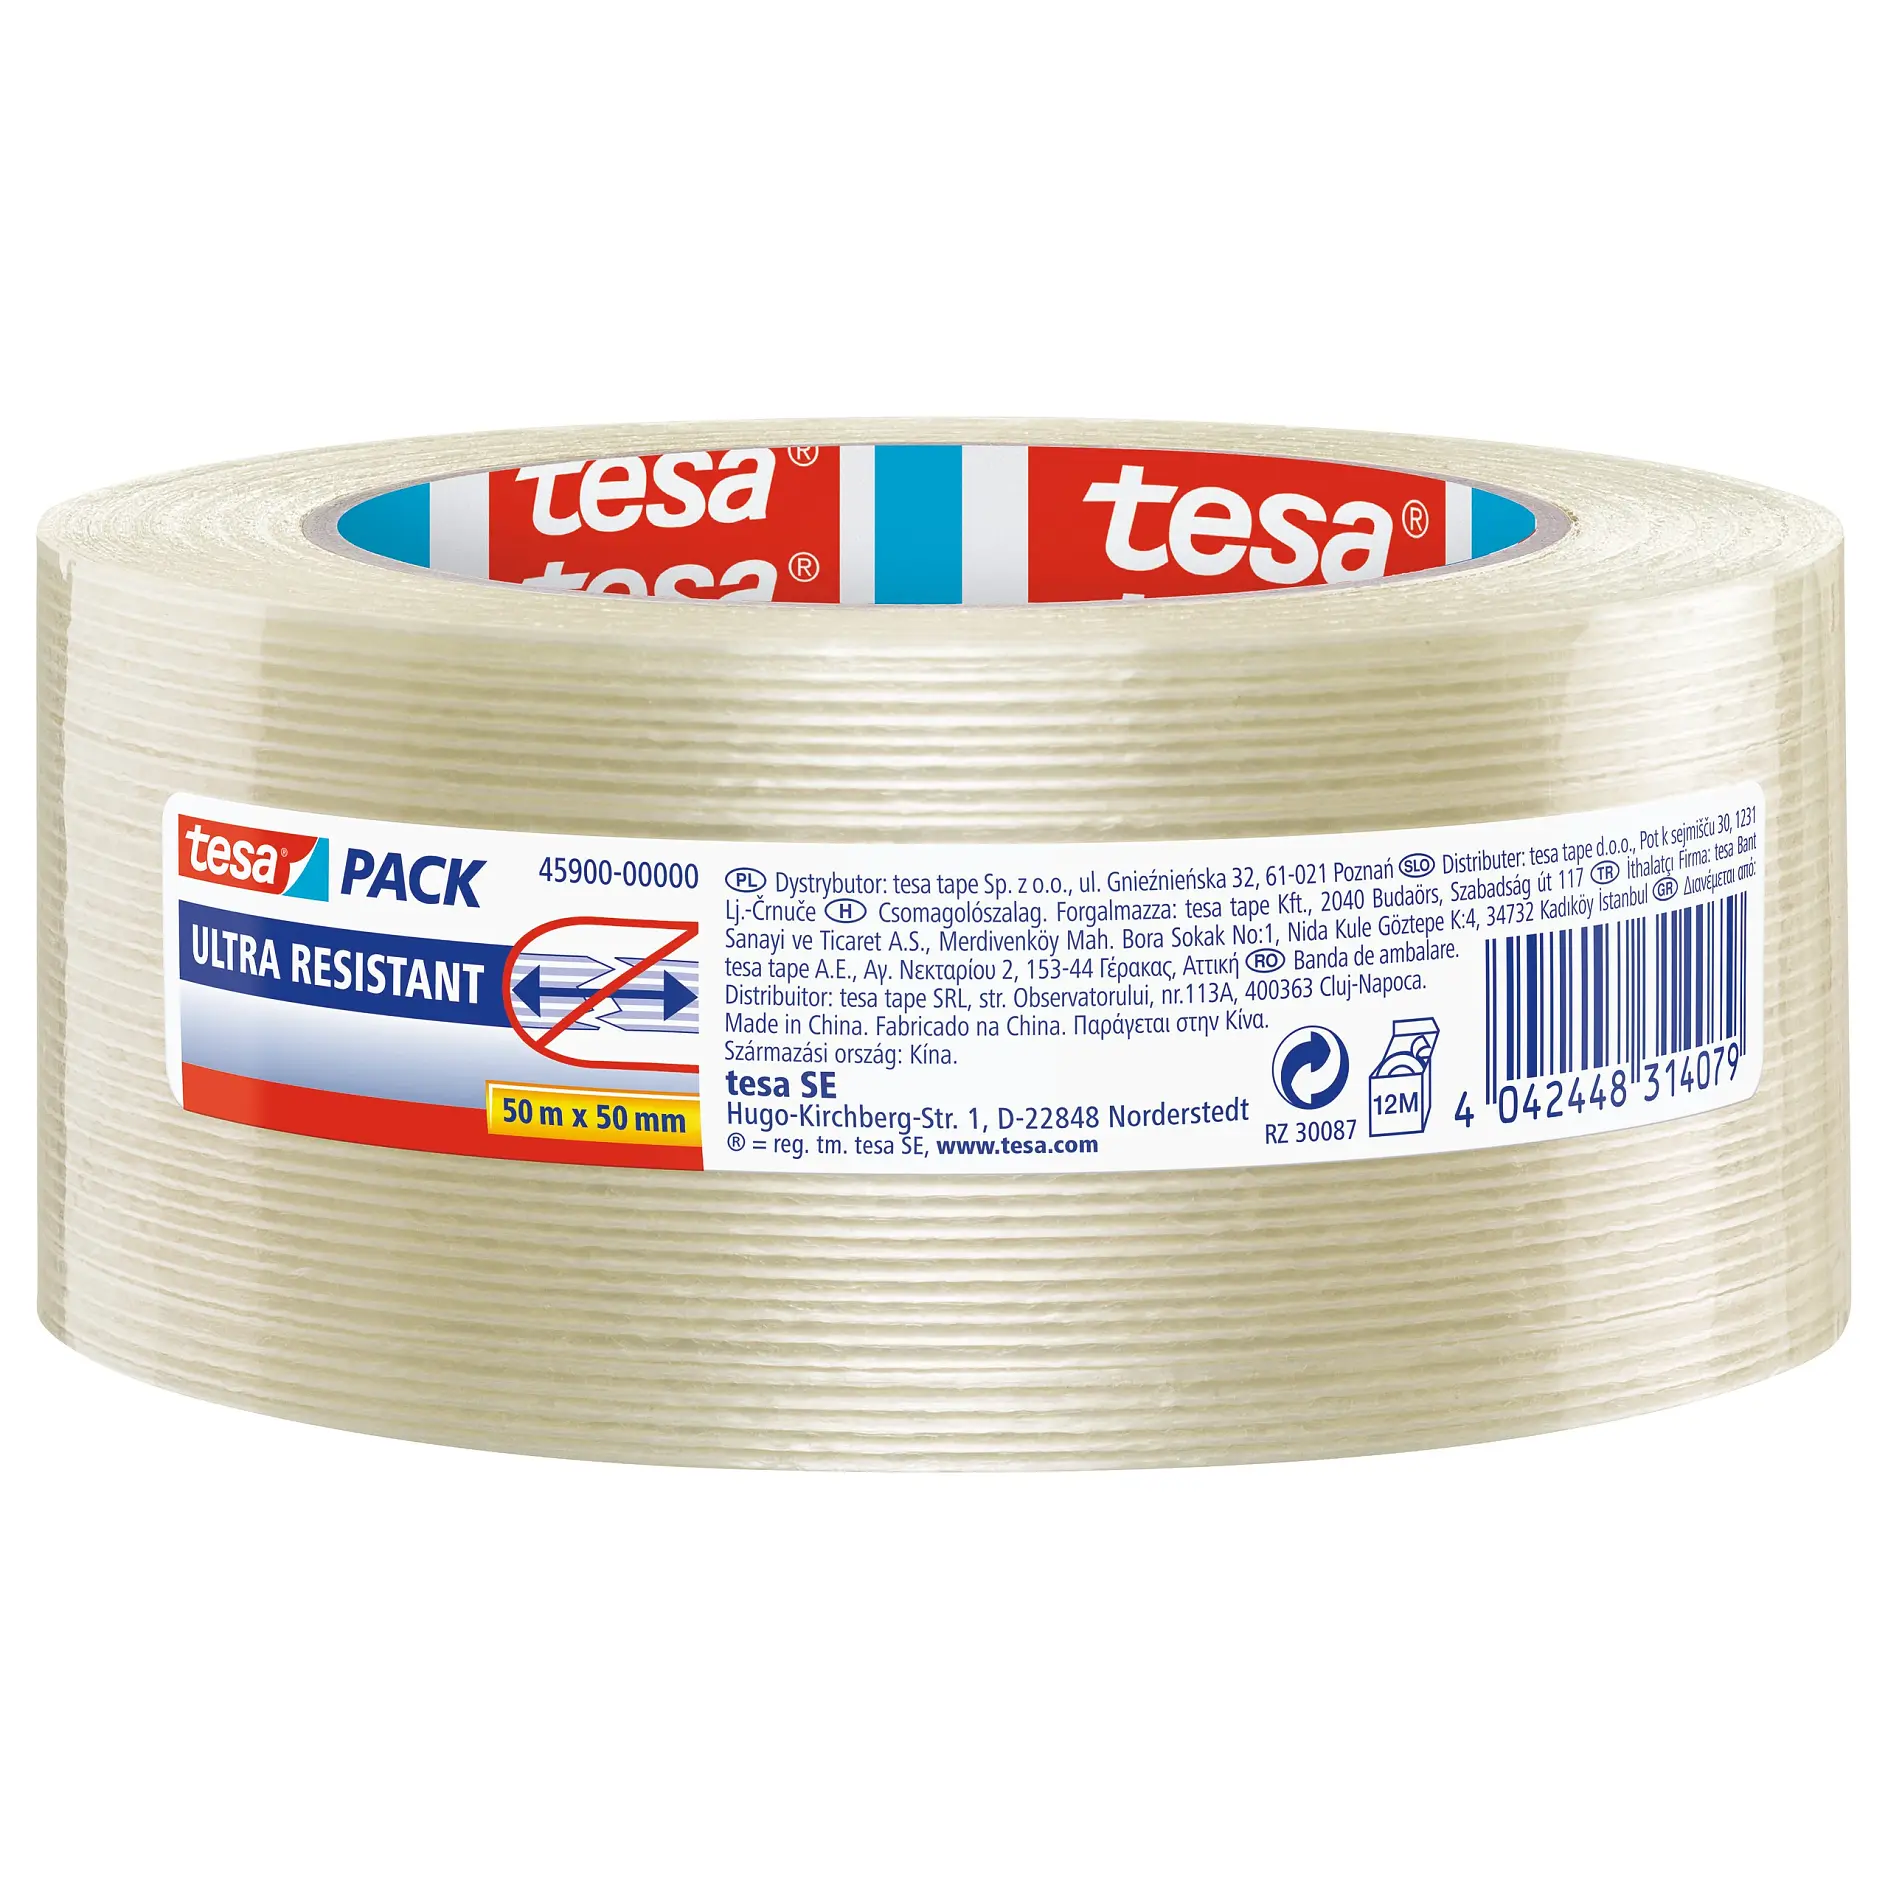 [en-en] tesapack Ultra resistant monofilament tape, 50m:50mm